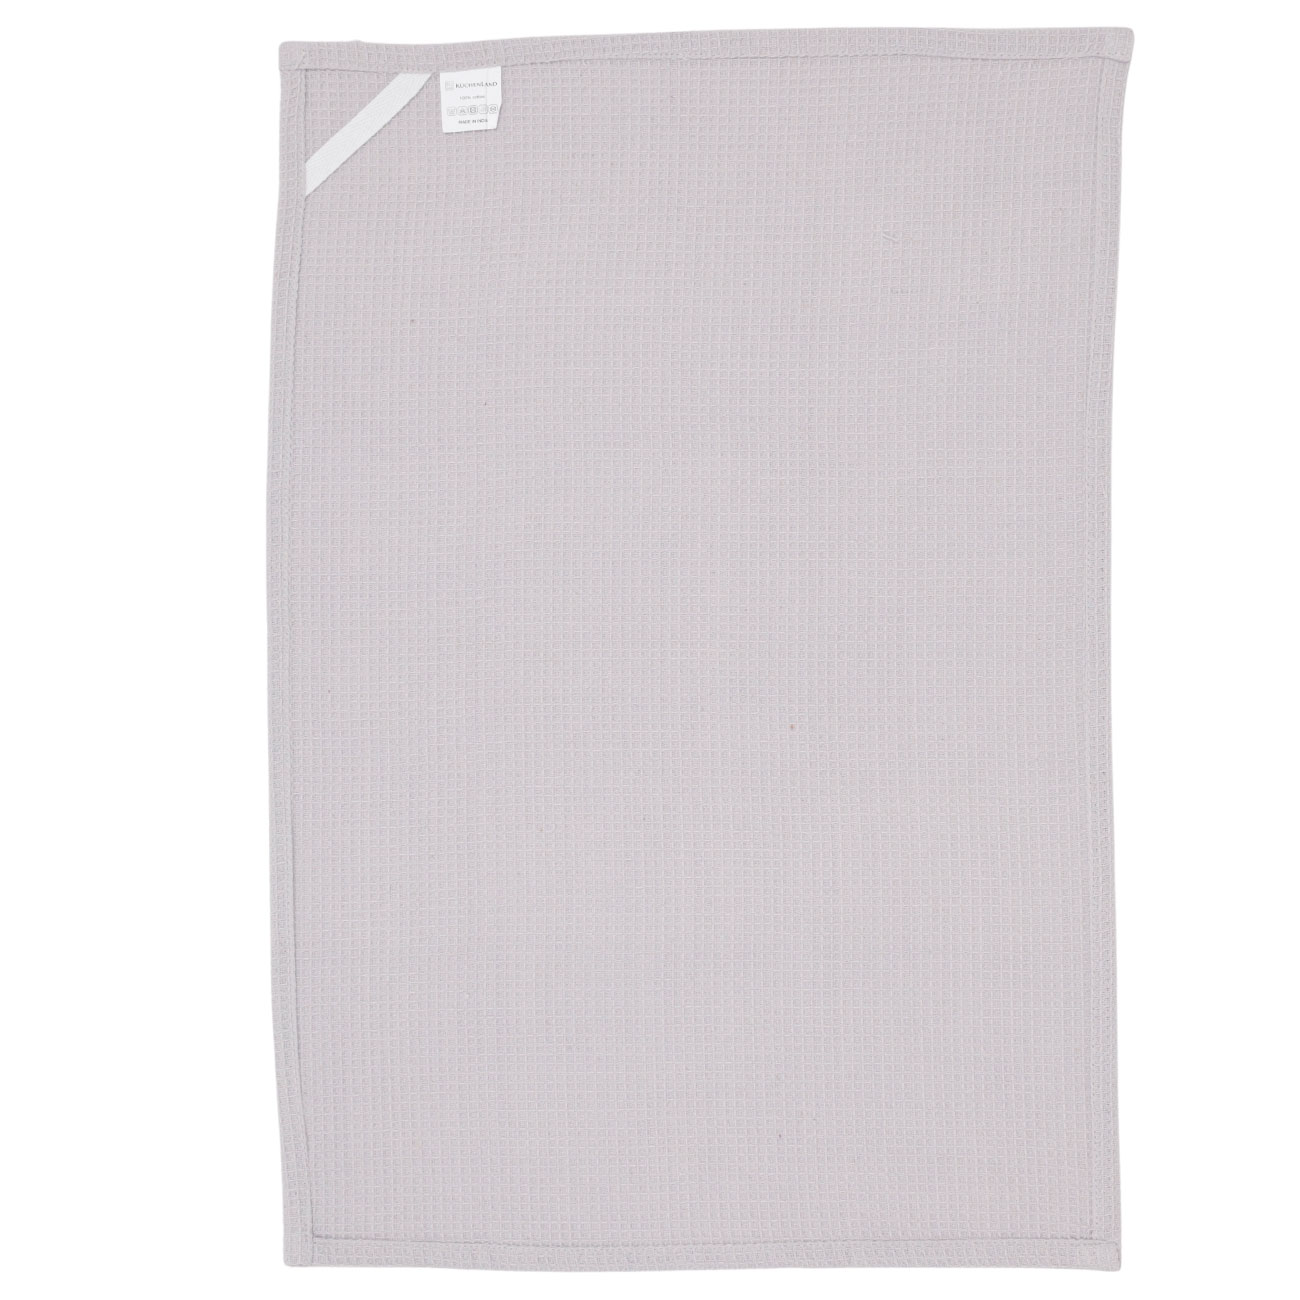 Kitchen towel, 2 pcs, 40x60 cm, cotton, white / gray, Family, Scroll изображение № 2